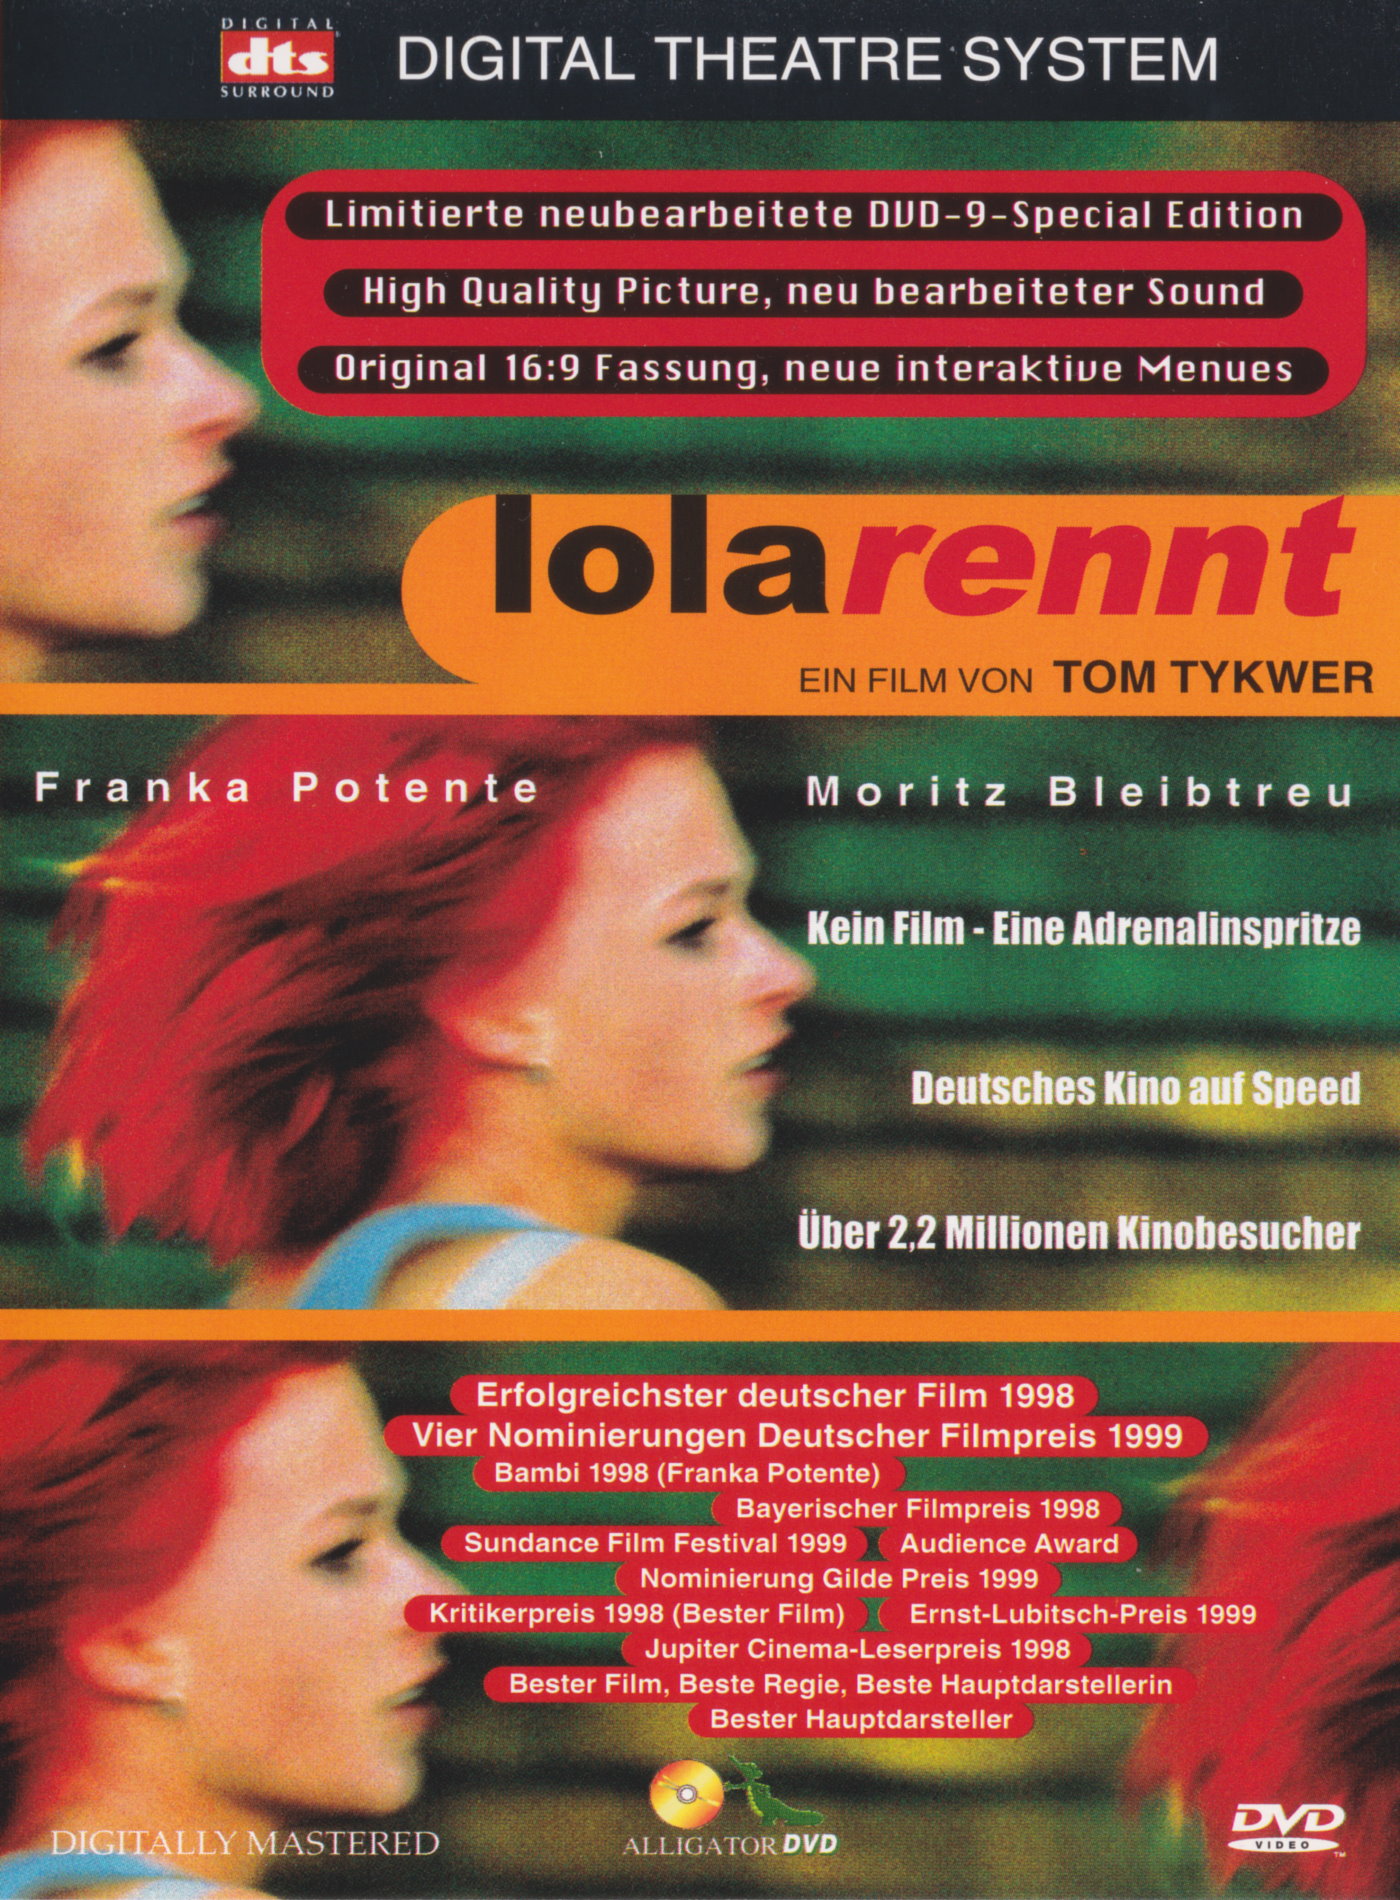 Cover - Lola rennt.jpg